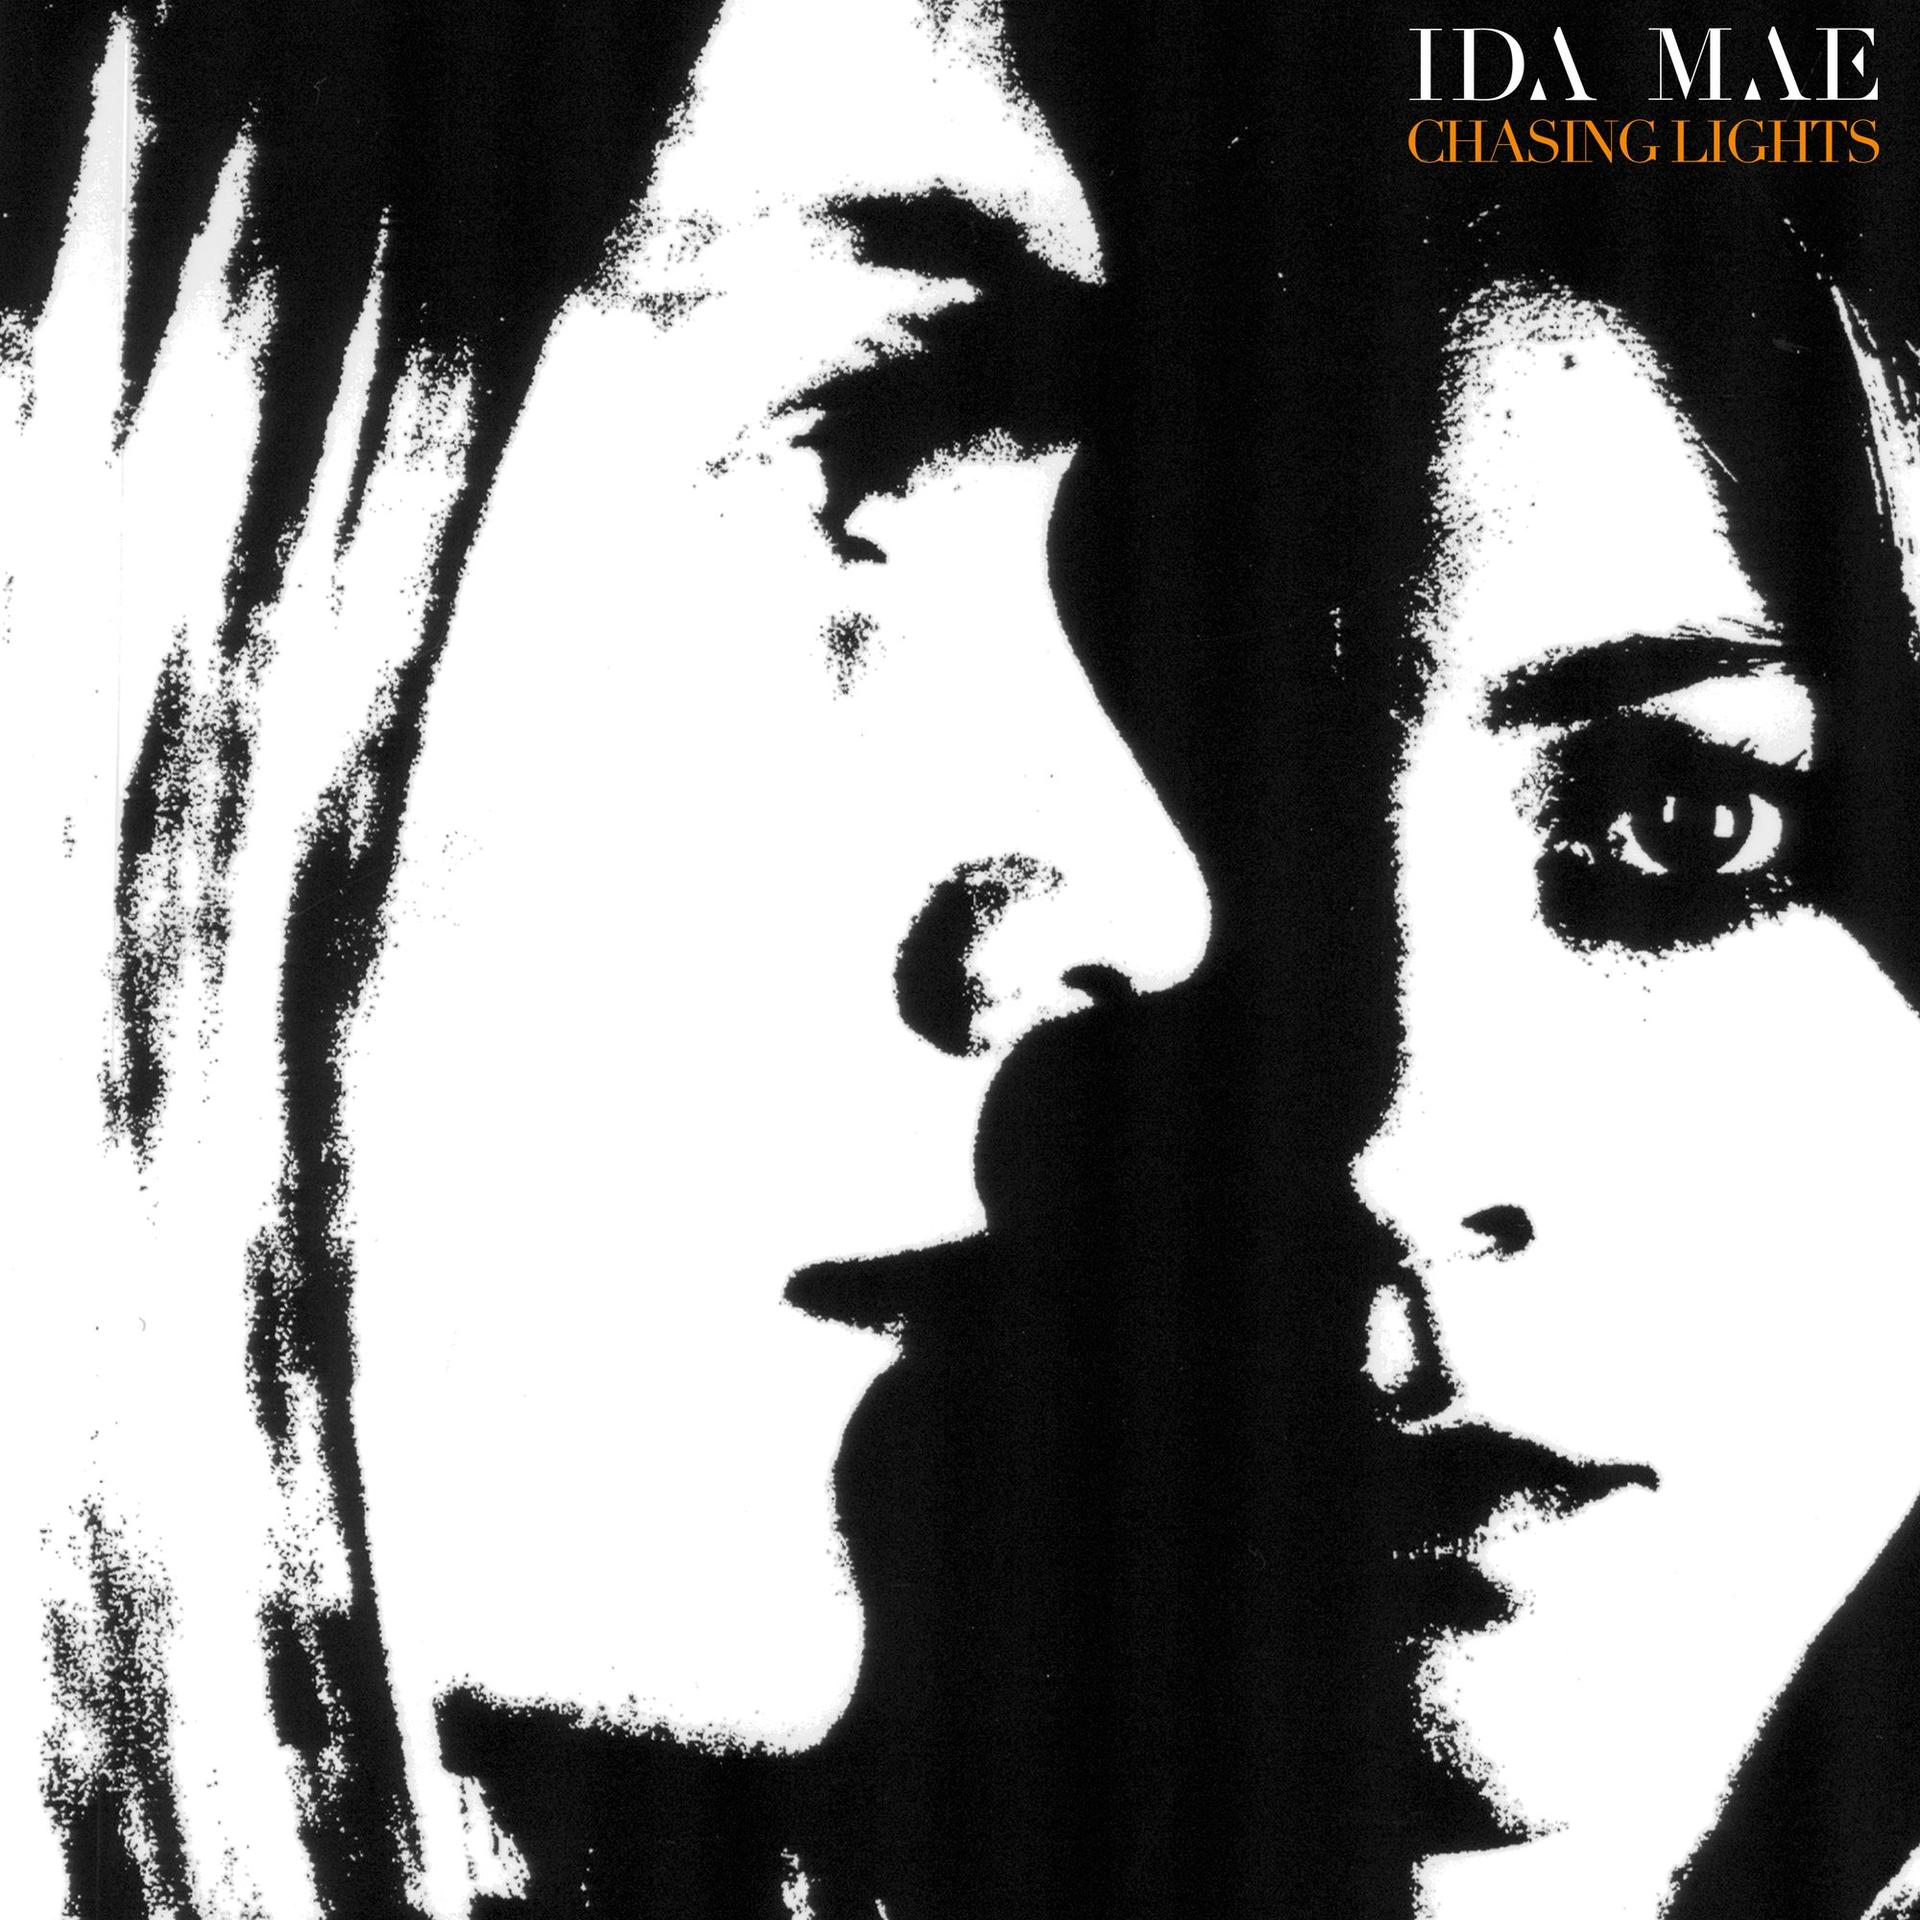 Ida Mae - Chasing Lights (Vinyl) - (LP)